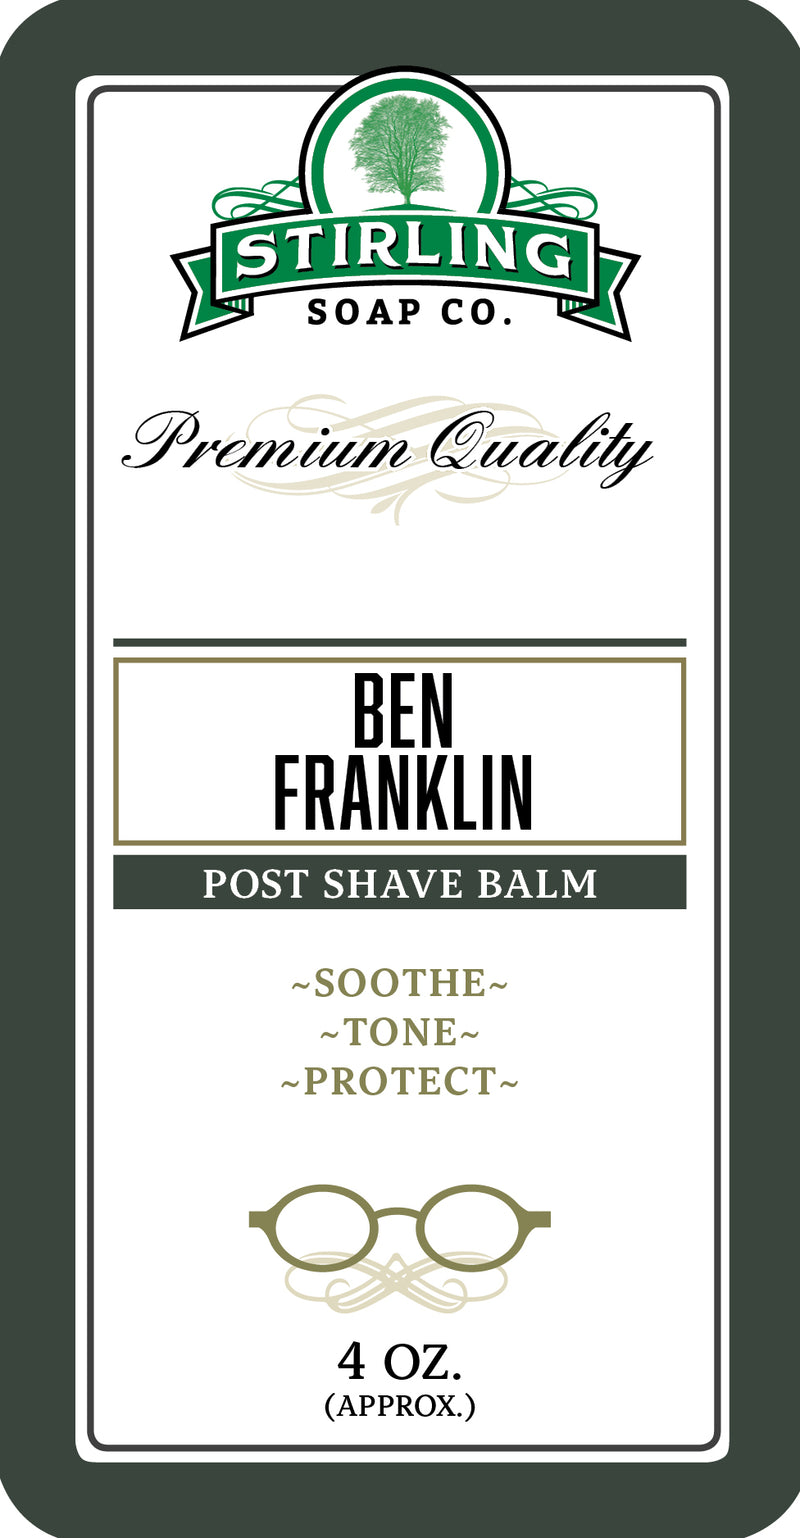 Ben Franklin - Post-Shave Balm